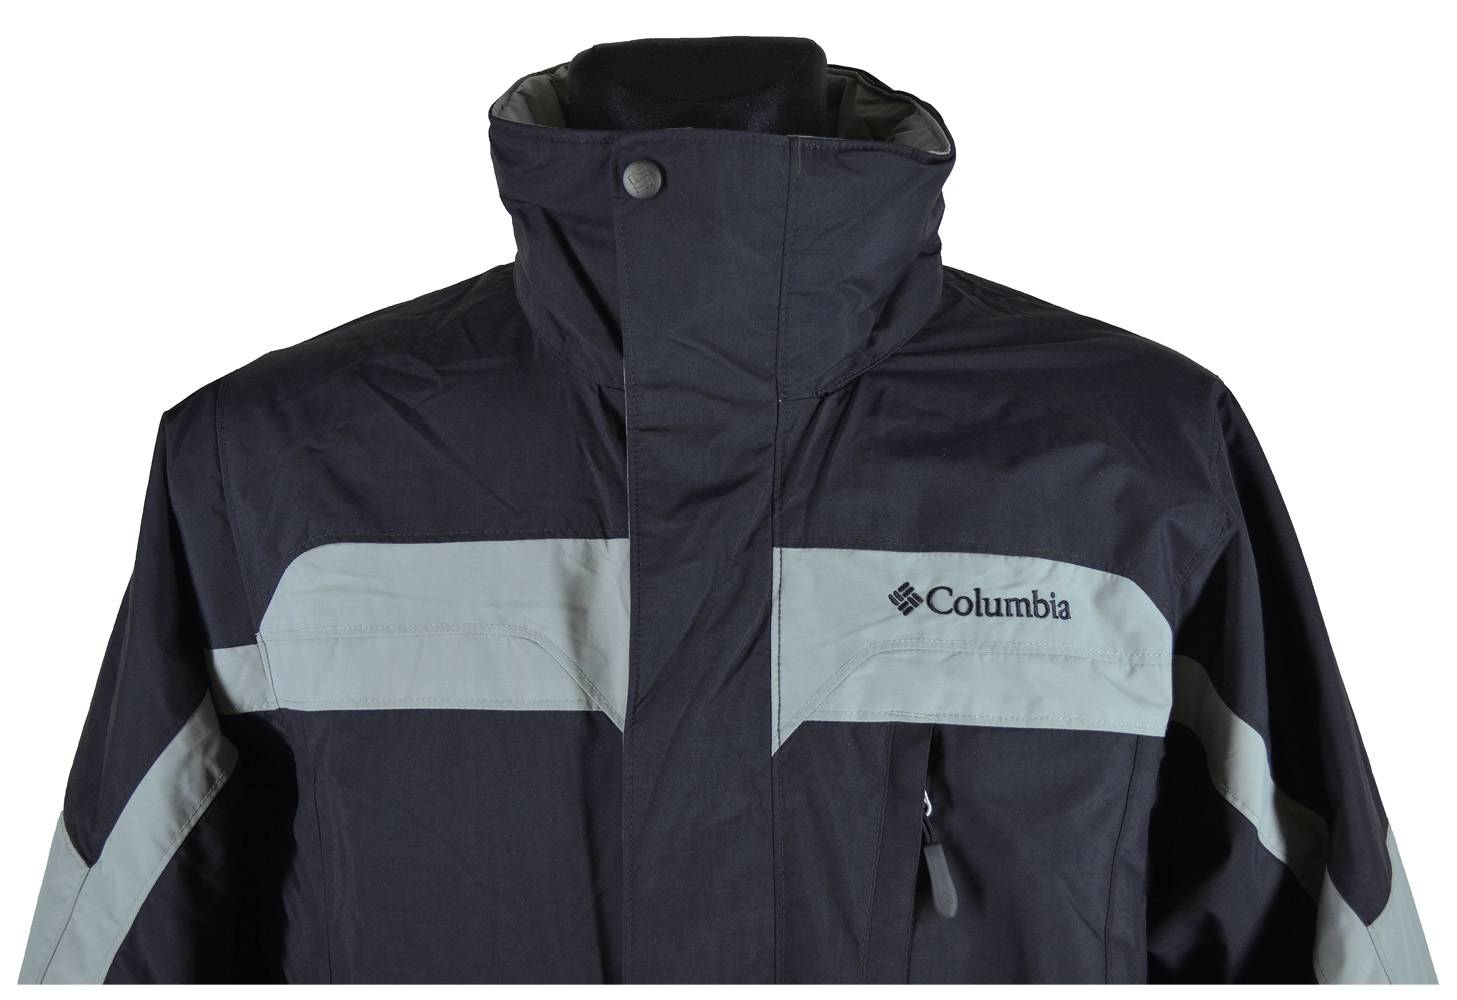 Коламбия чья. Куртка мужская Columbia sm4261012. Columbia Omni Shield куртка мужская. Коламбия Омни шилд куртка. Куртка Columbia Northway.